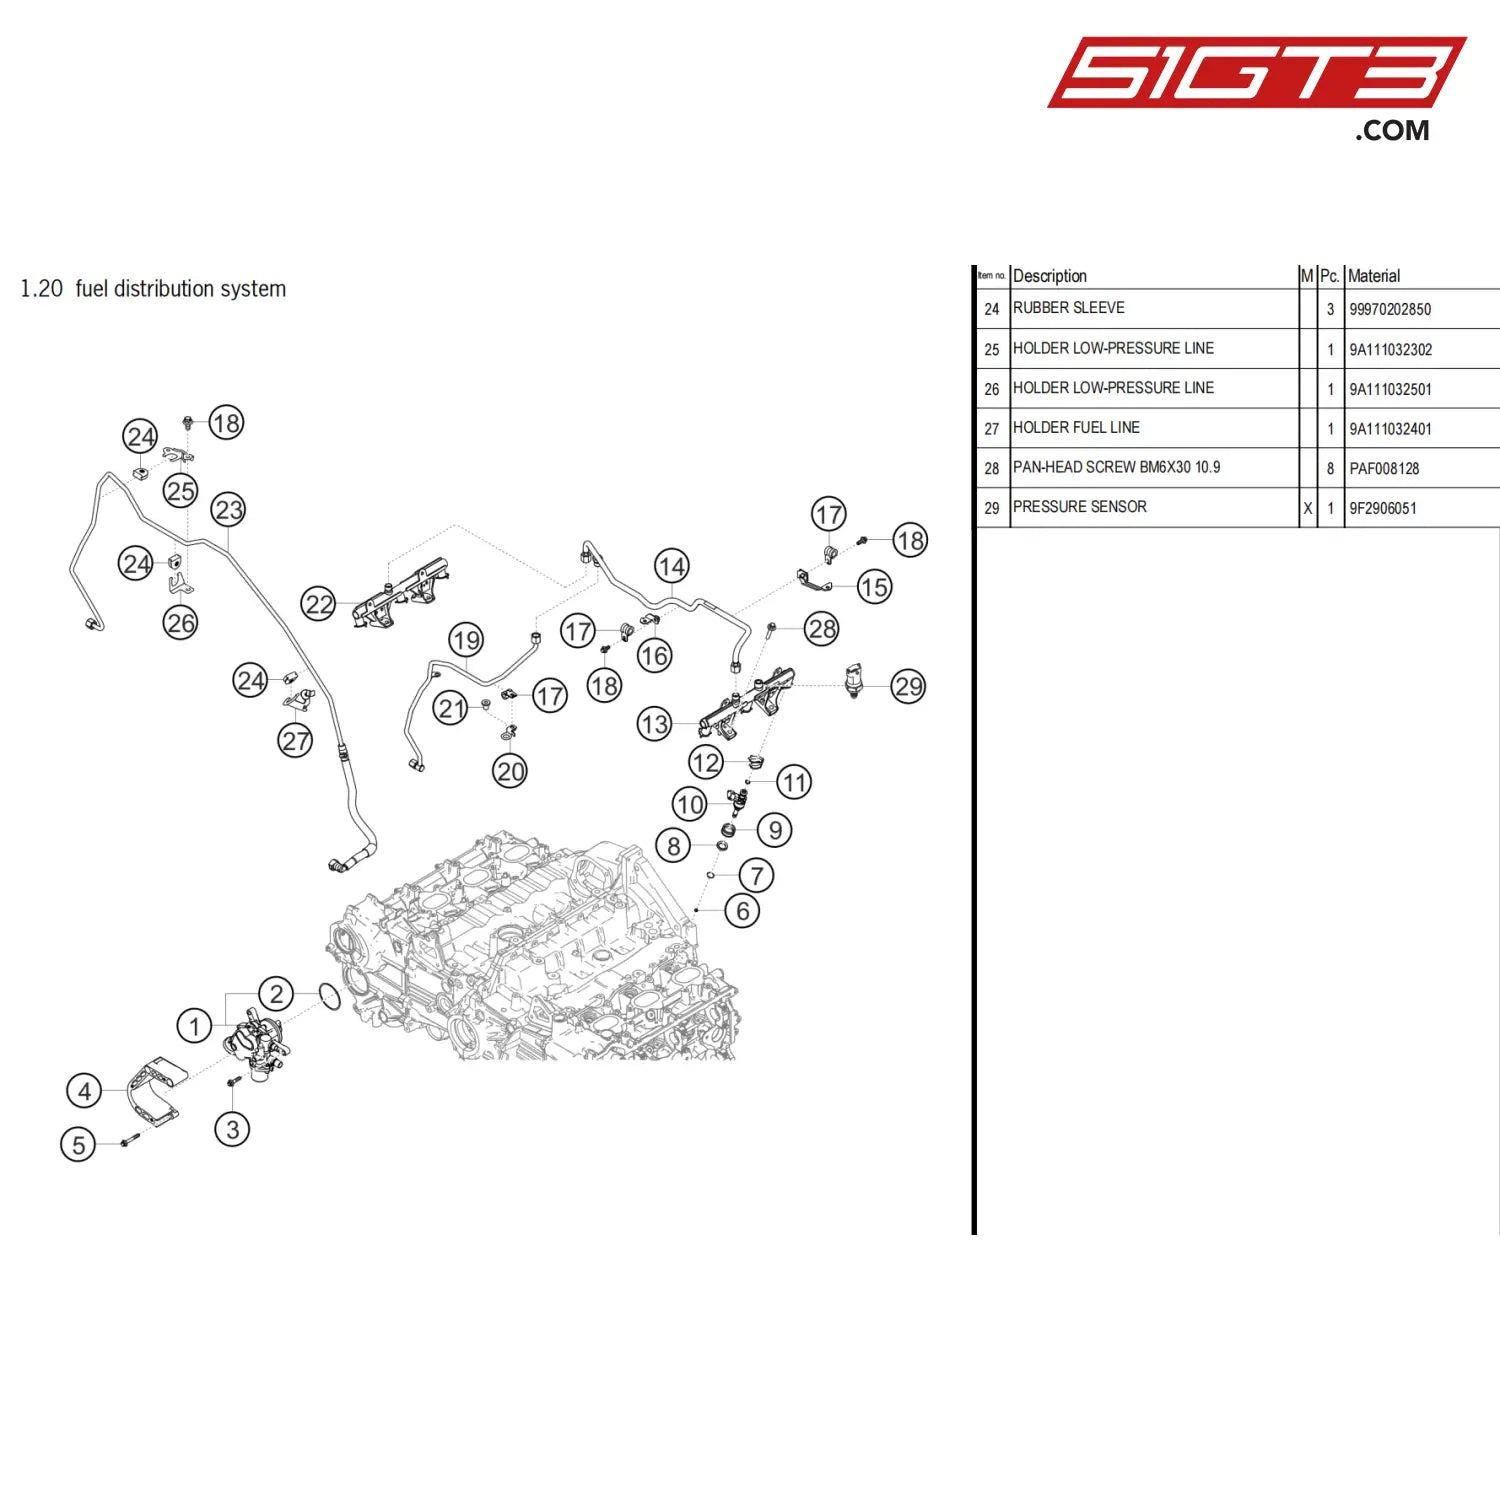 O-Ring - 99970111241 [Porsche 718 Cayman Gt4 Clubsport] Fuel Distribution System